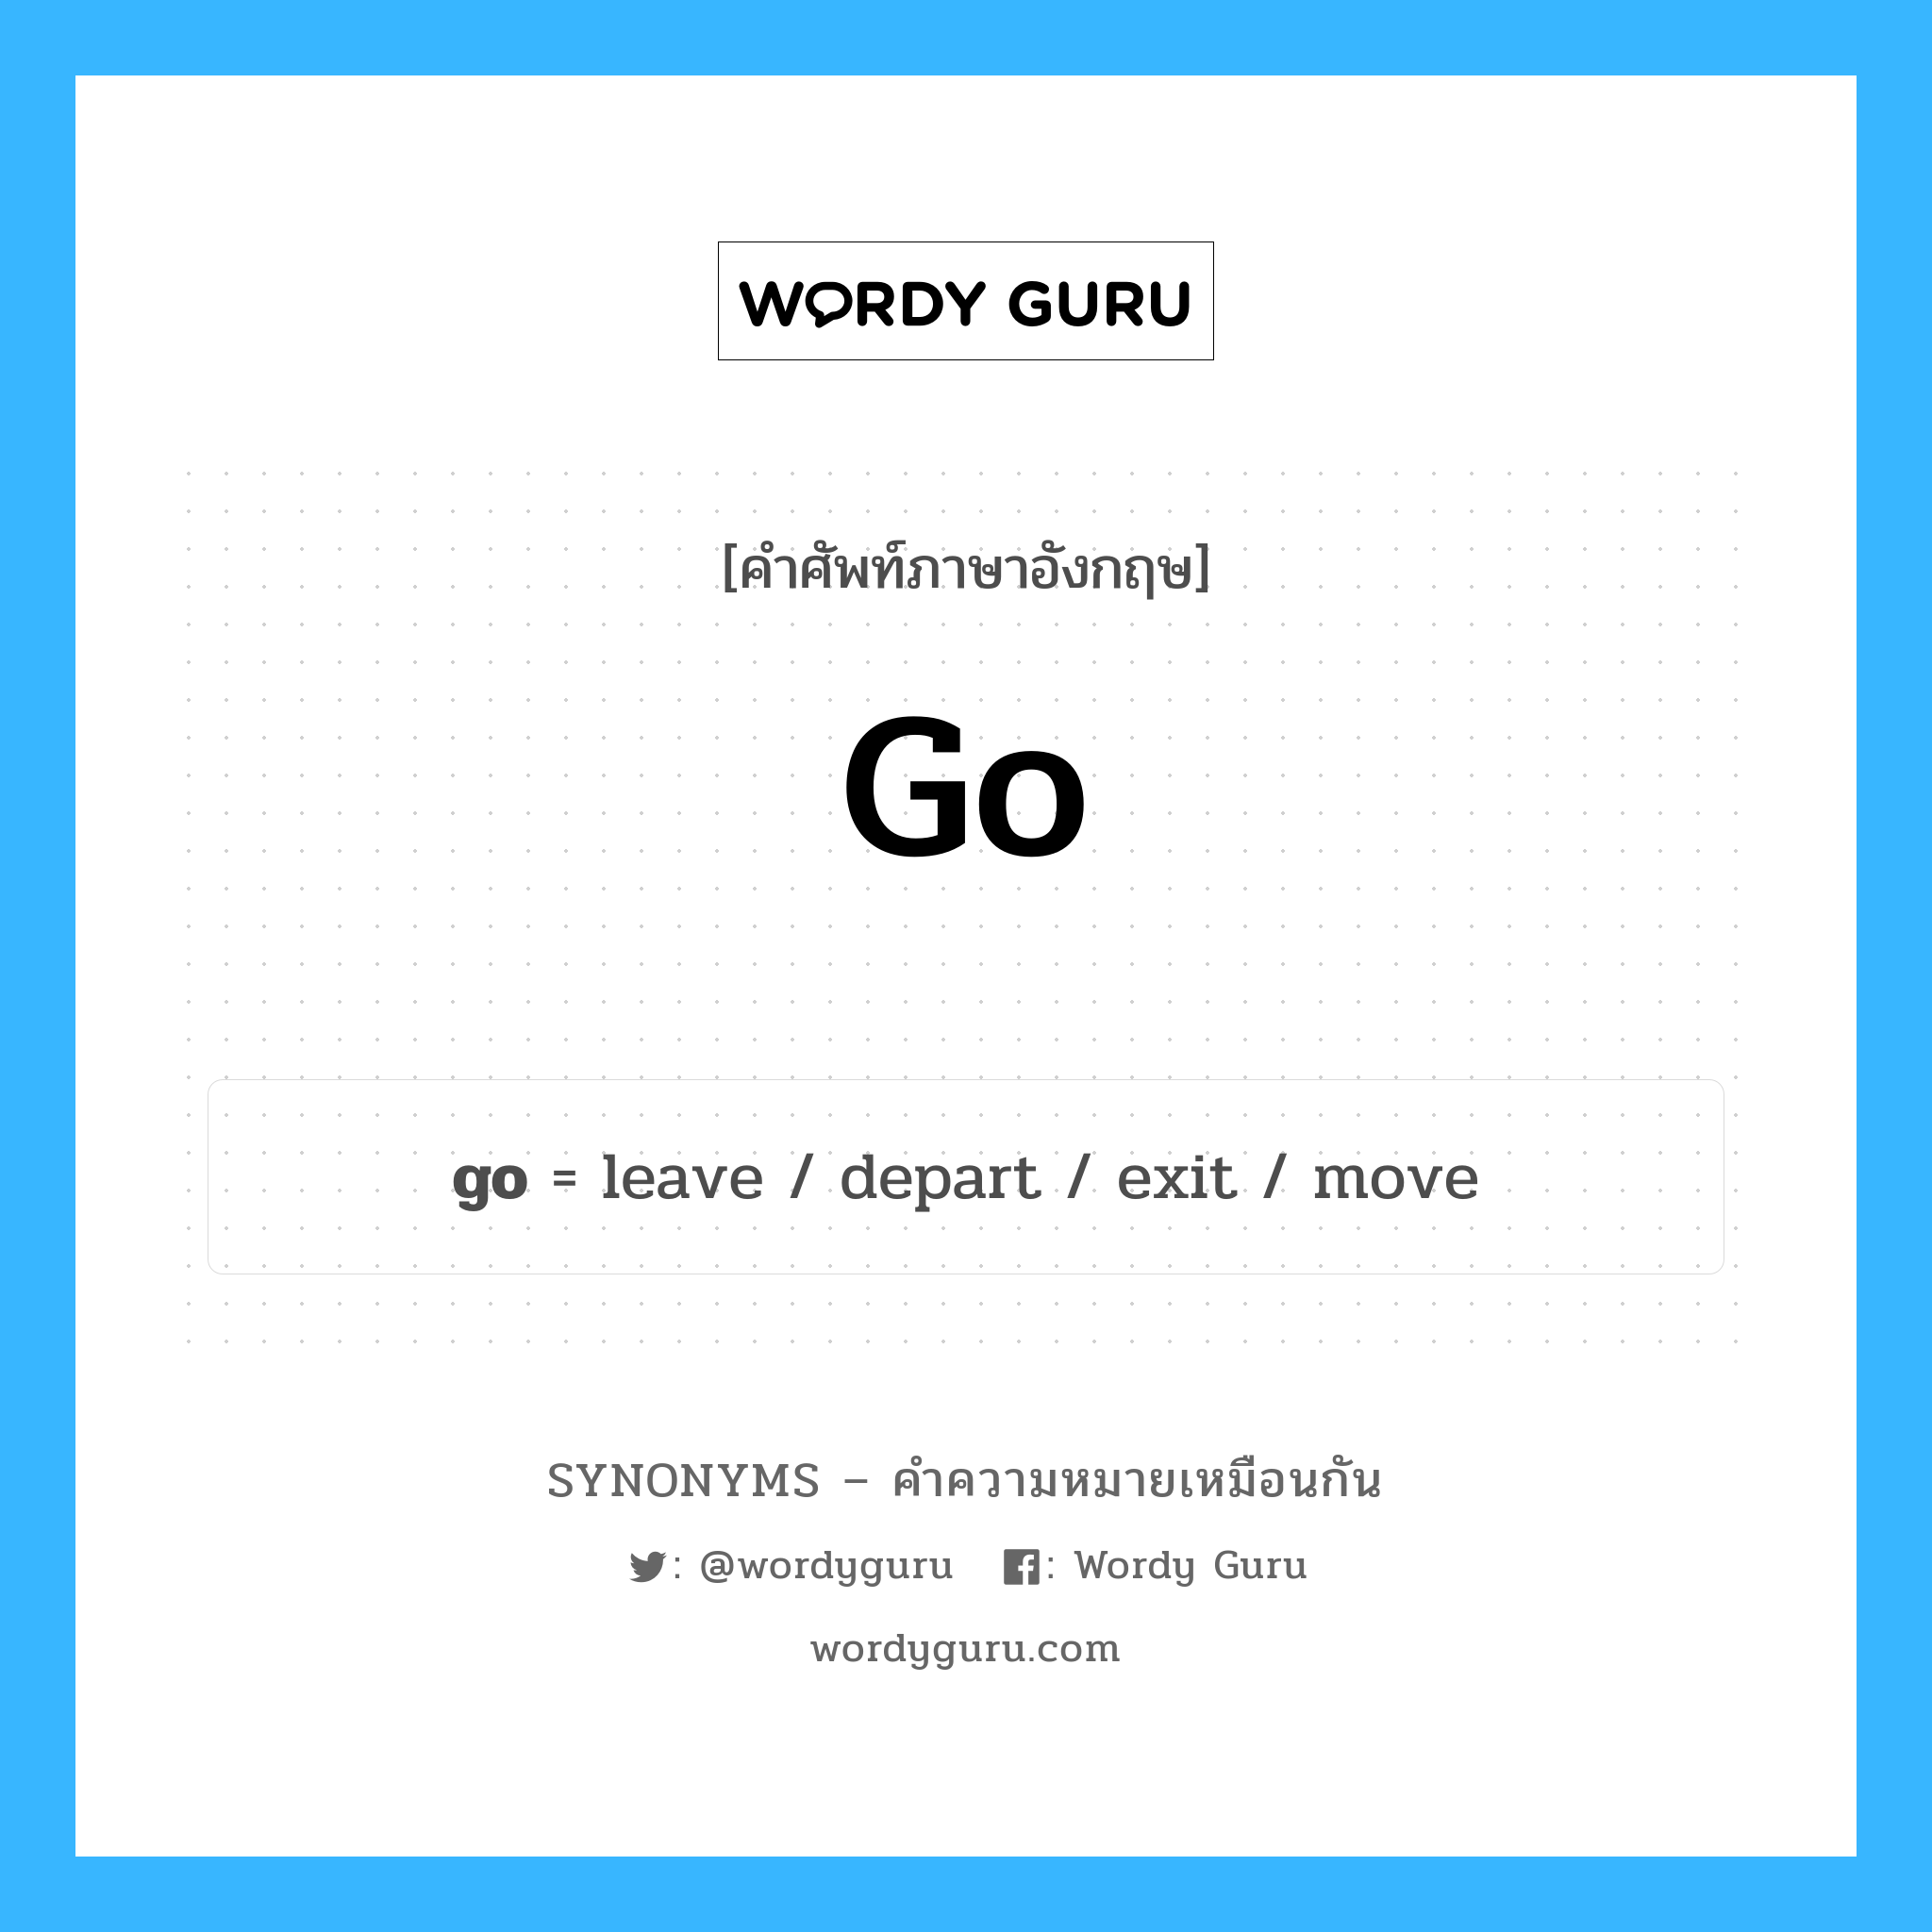 move เป็นหนึ่งใน go และมีคำอื่น ๆ อีกดังนี้, คำศัพท์ภาษาอังกฤษ move ความหมายคล้ายกันกับ go แปลว่า ย้าย หมวด go